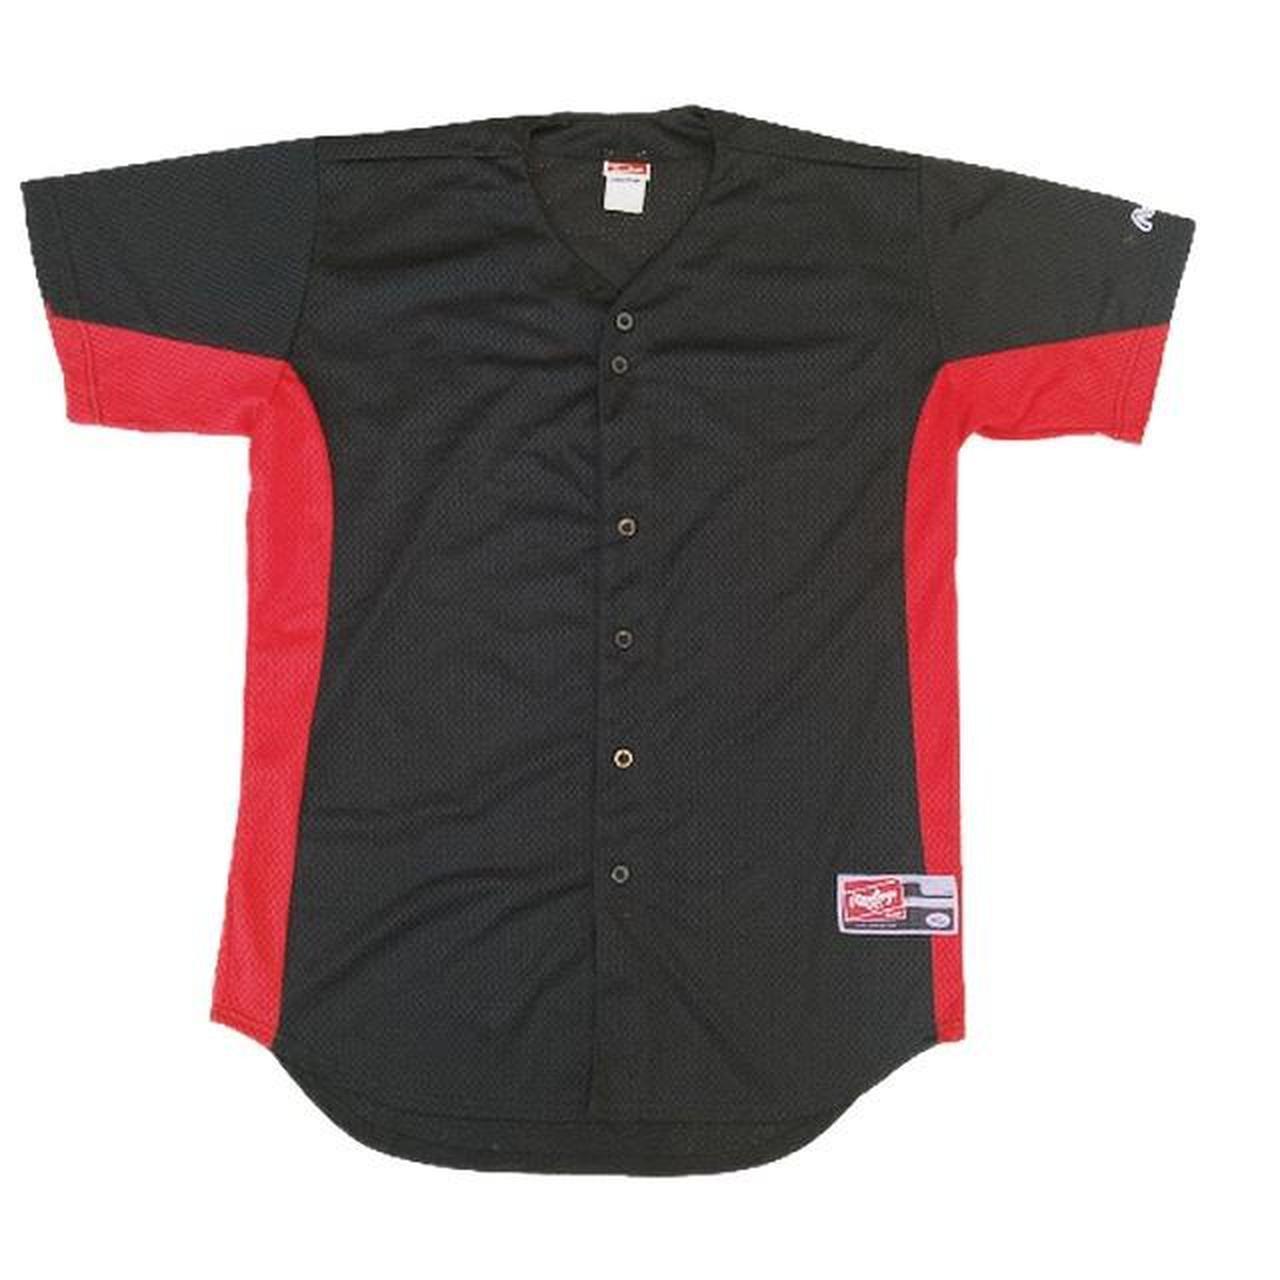 Vintage baseball jersey in black with contrasting - Depop